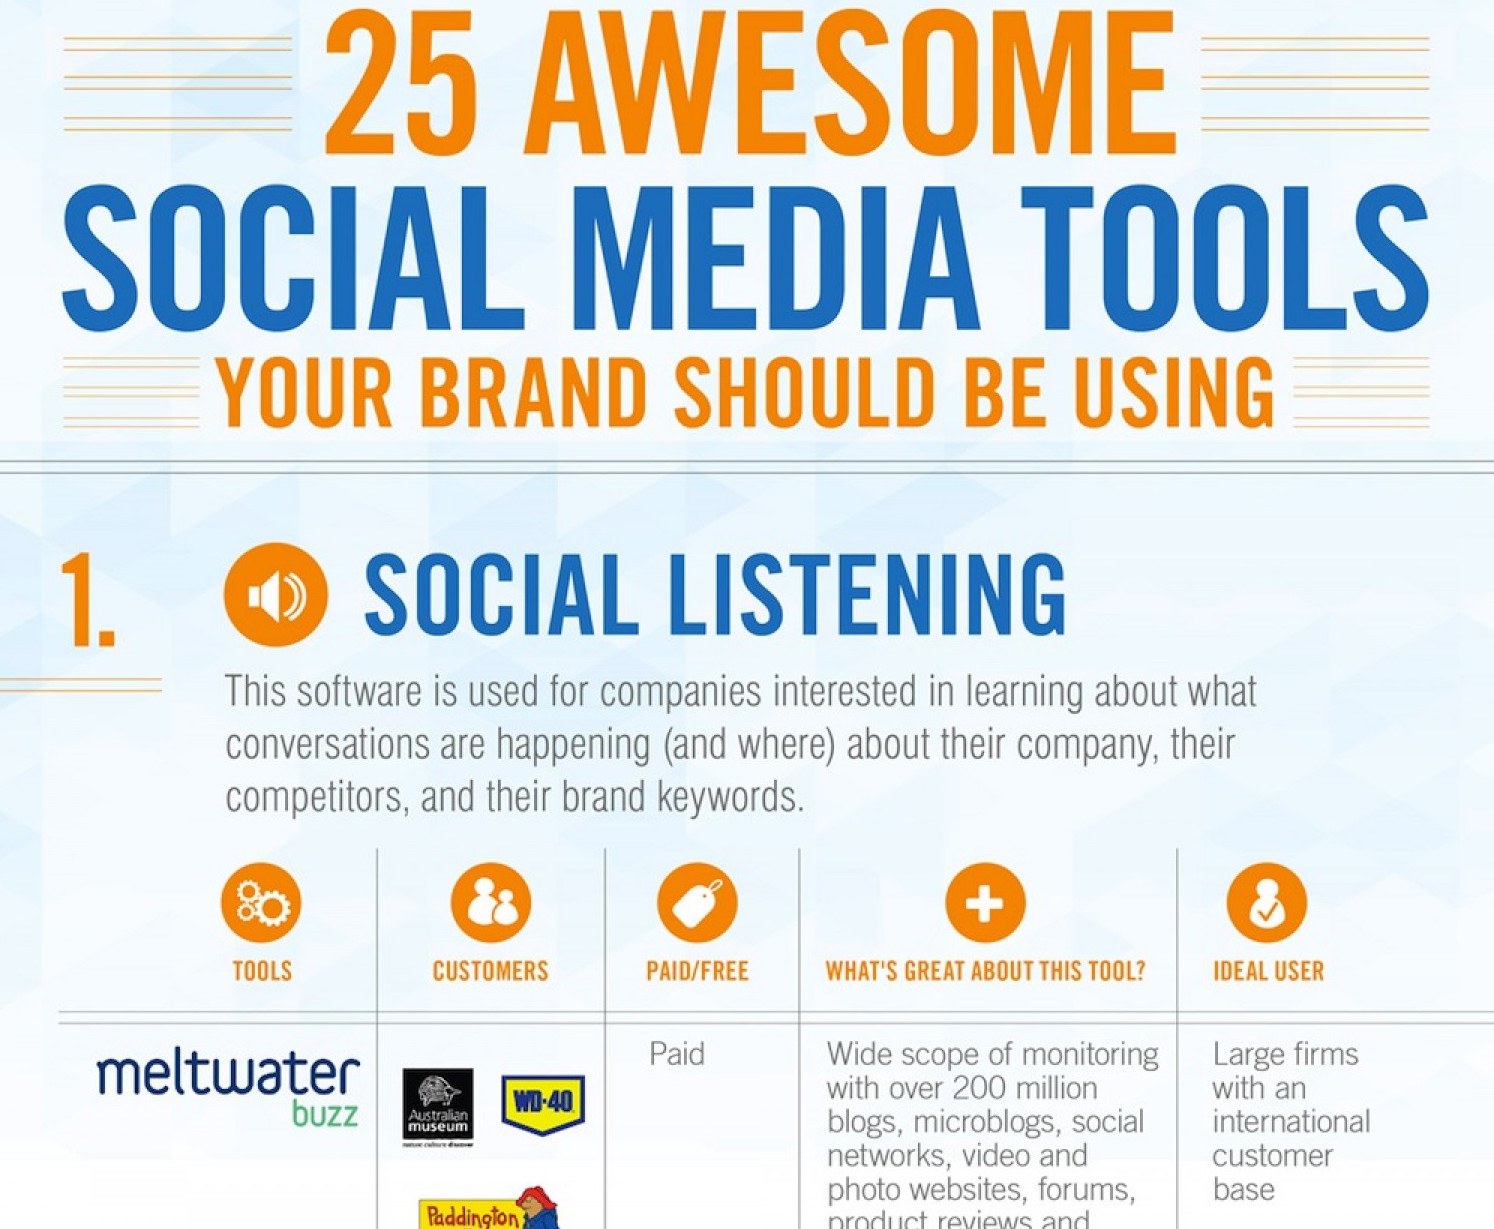 25 Awesome Social Media Tools